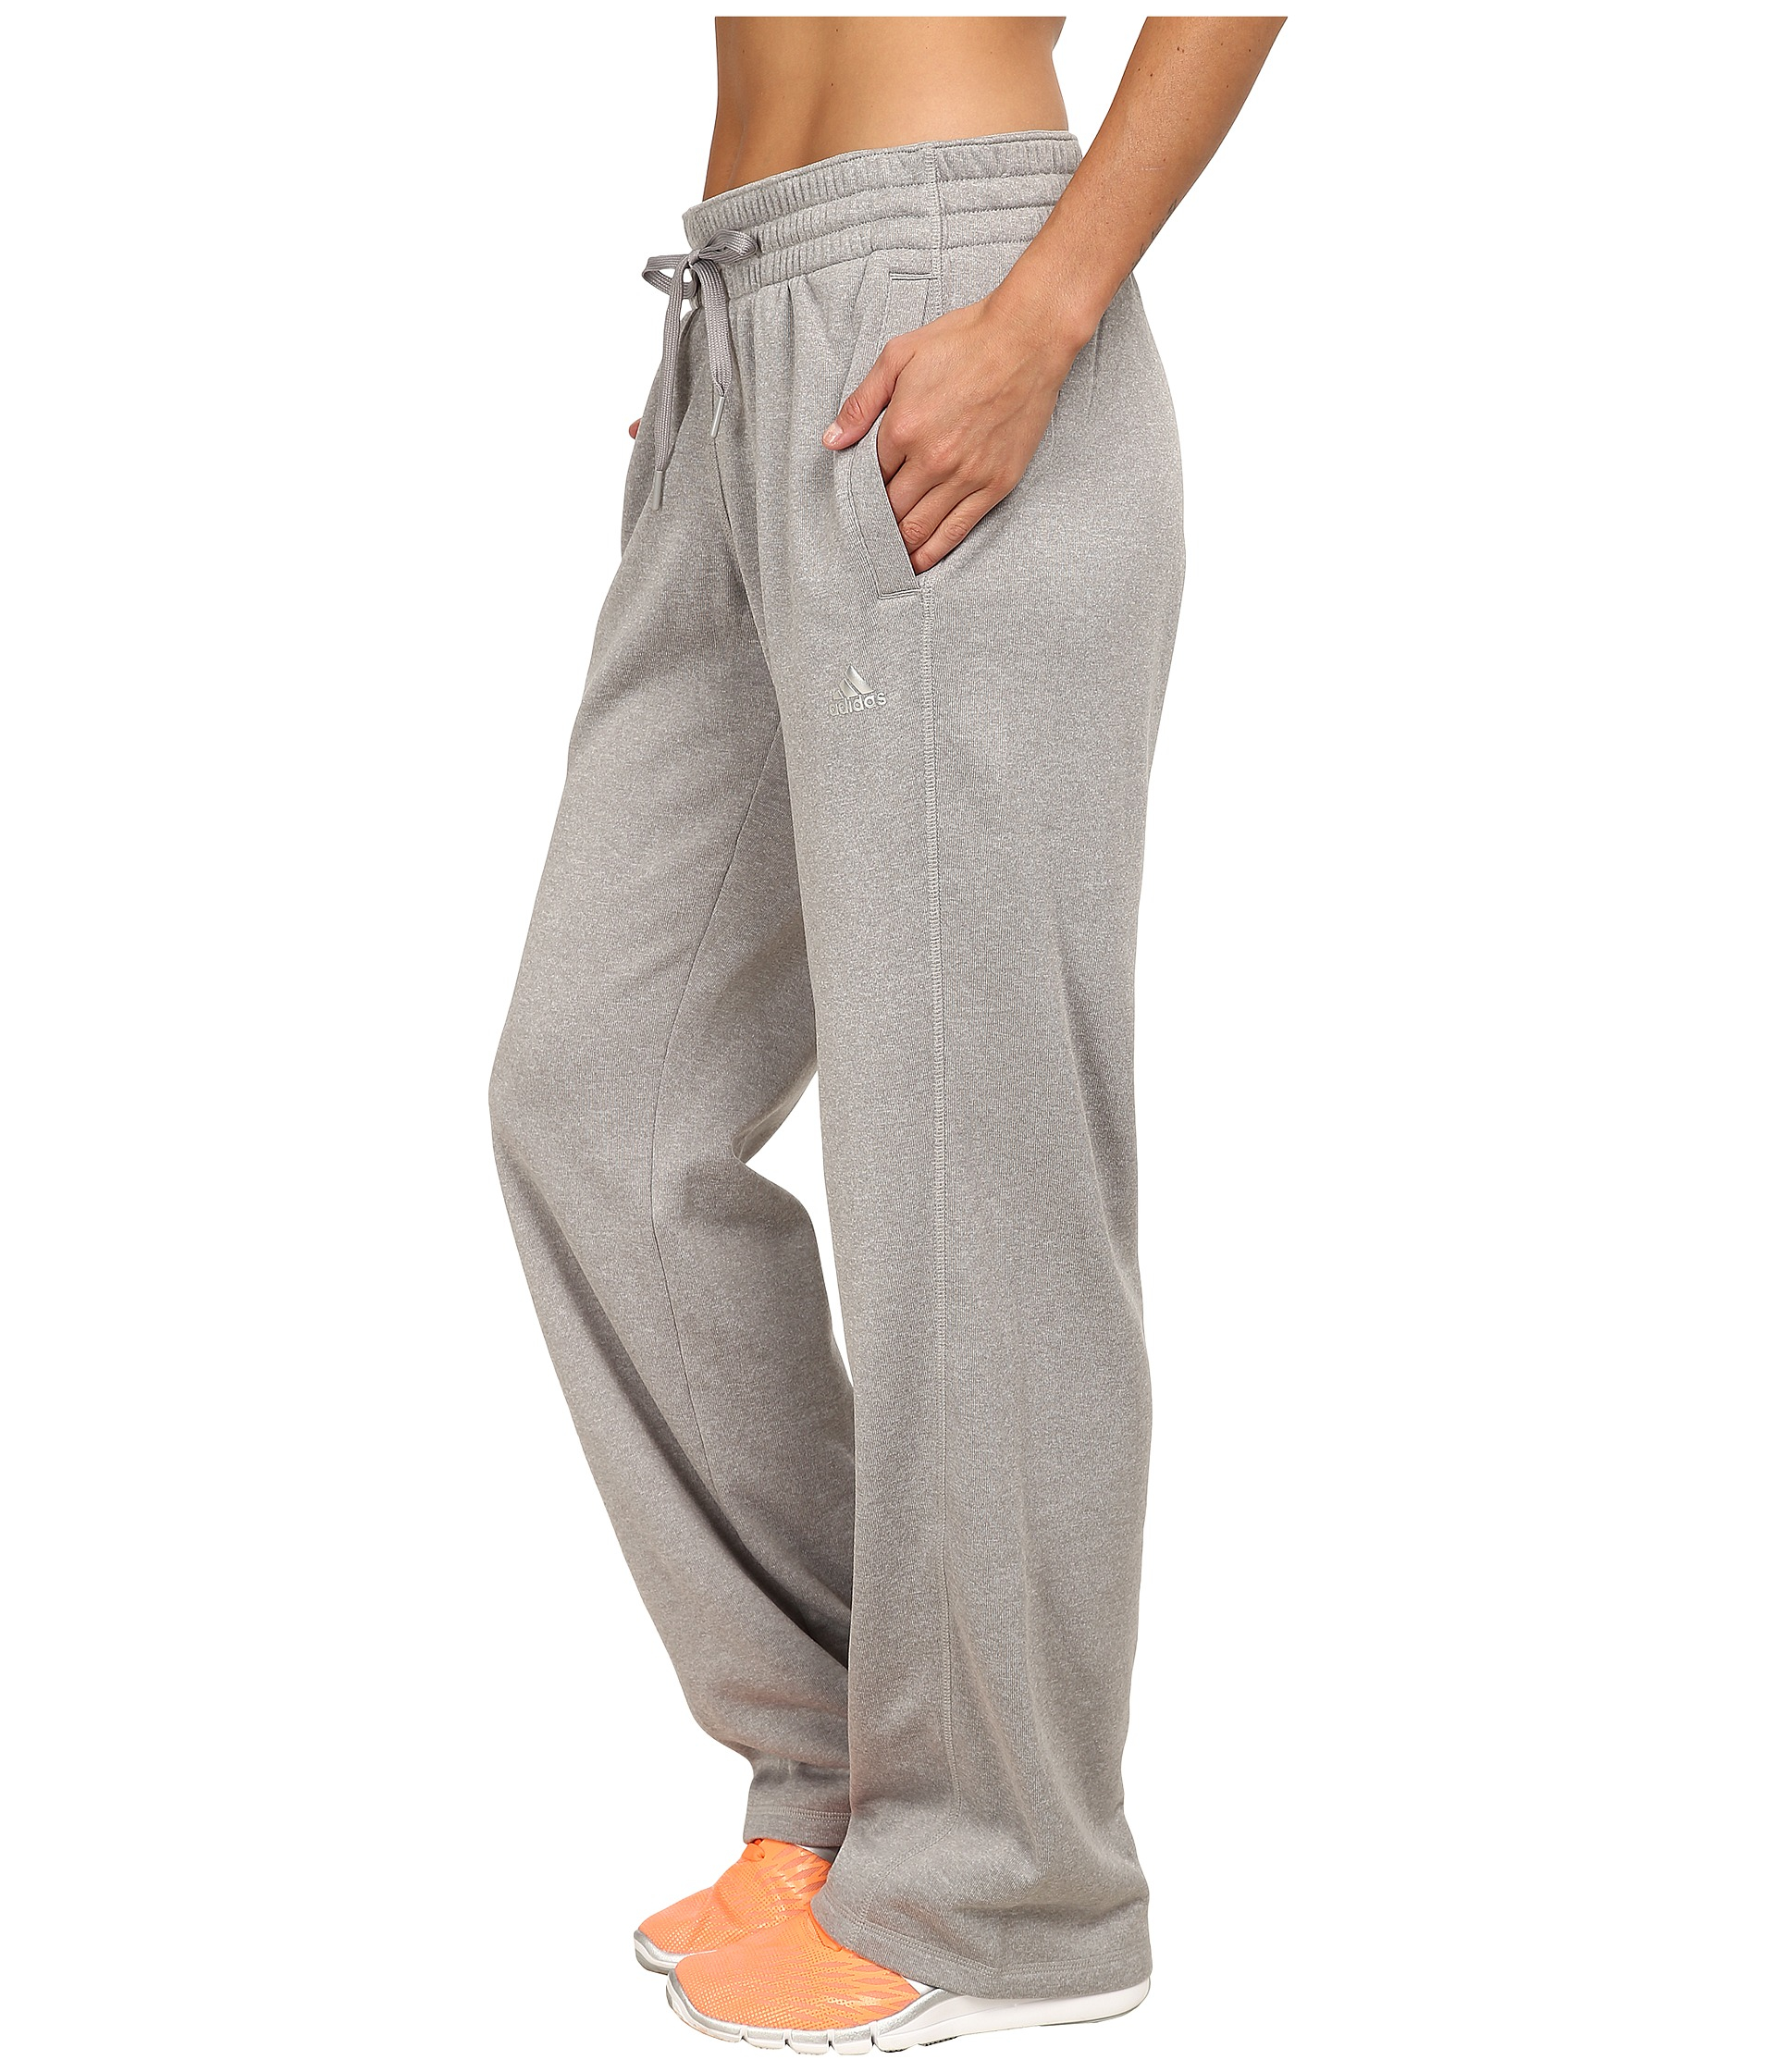 Lyst - Adidas Ultimate Fleece Pants in Gray